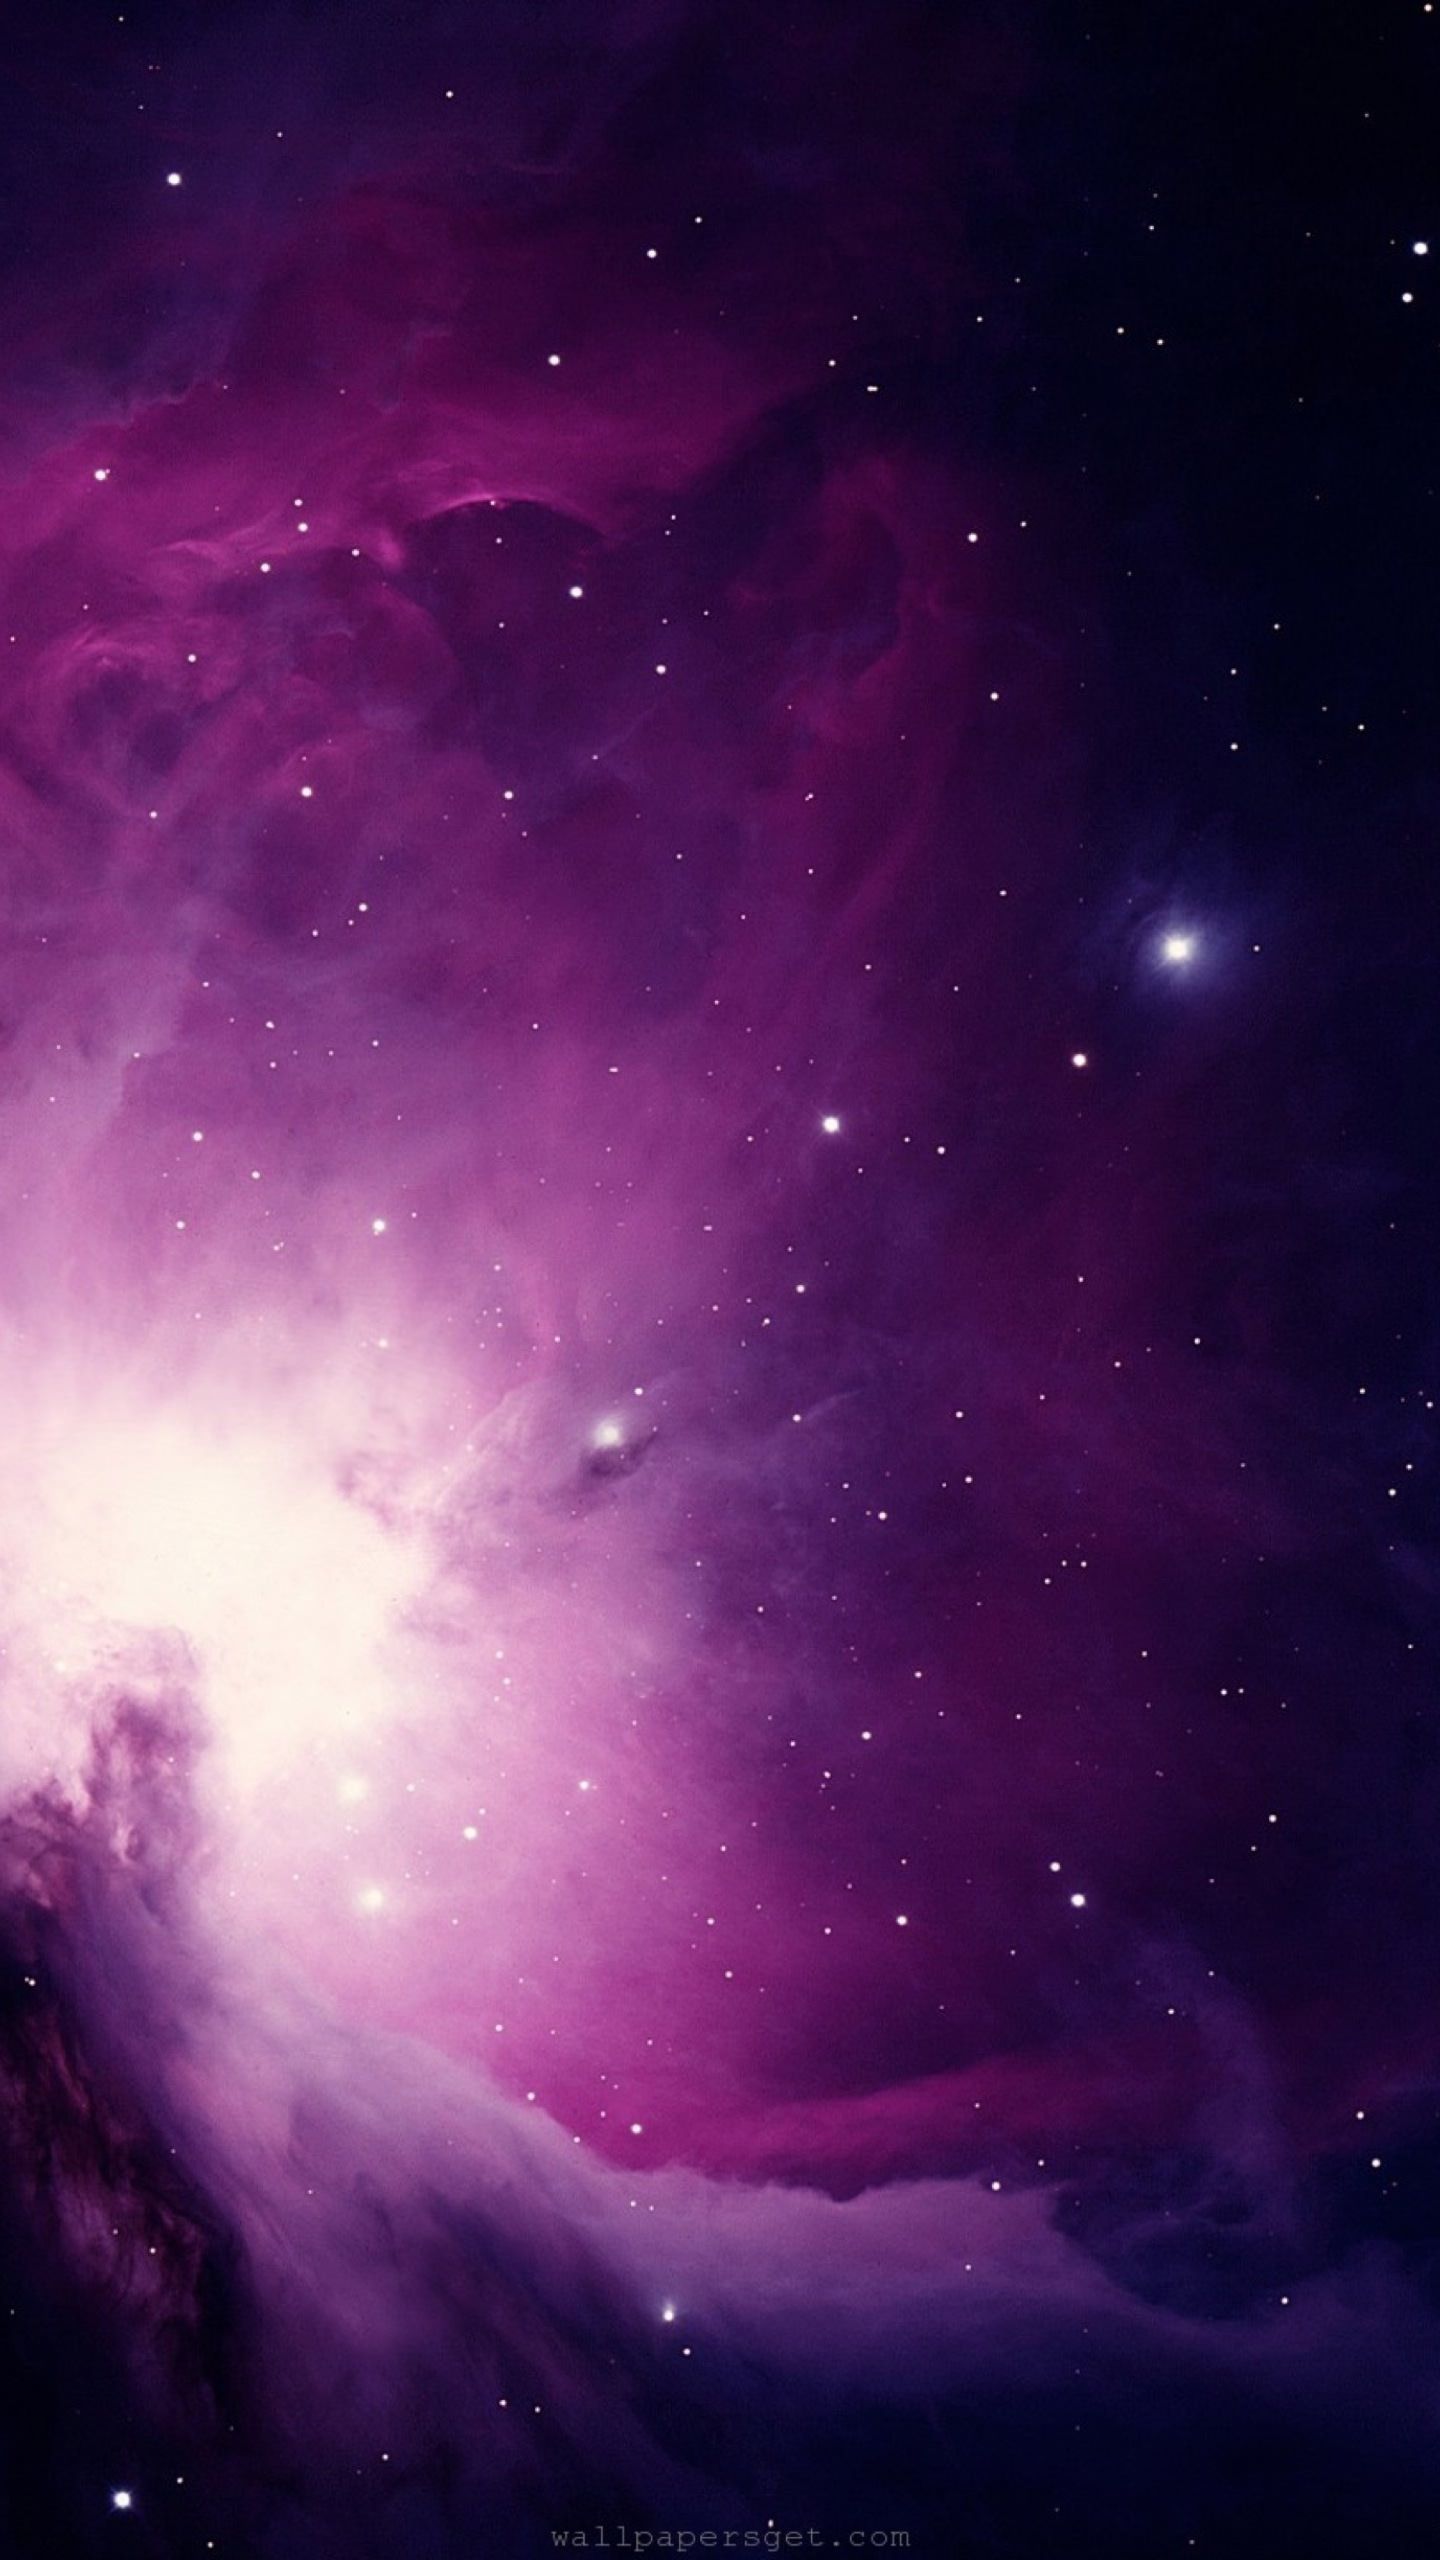 Space purple | wallpaper.sc SmartPhone